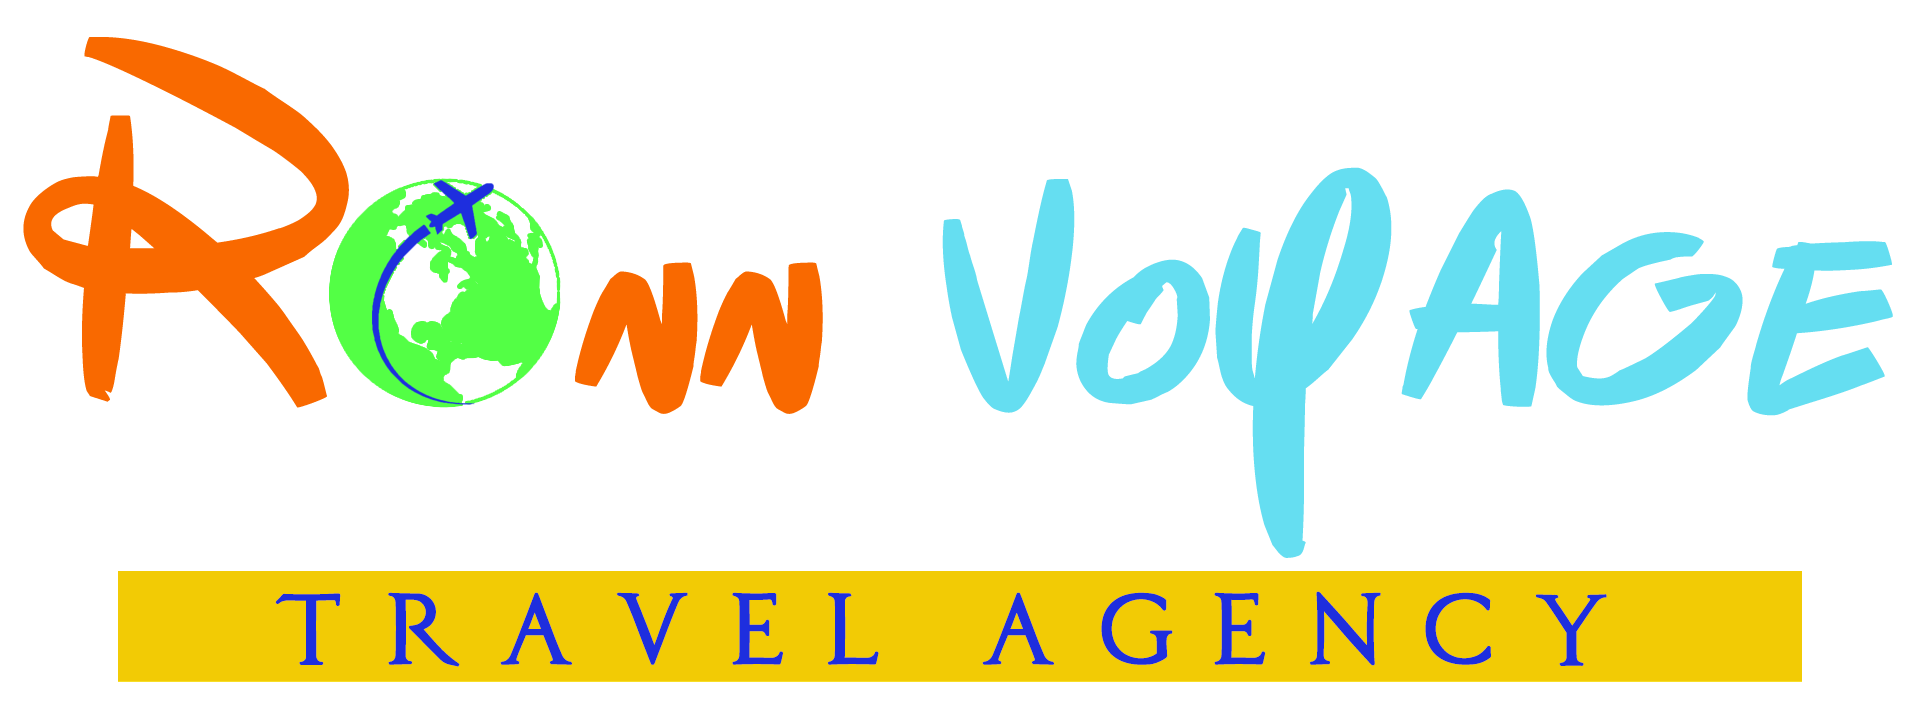 Ronn Voyage Travel Agency